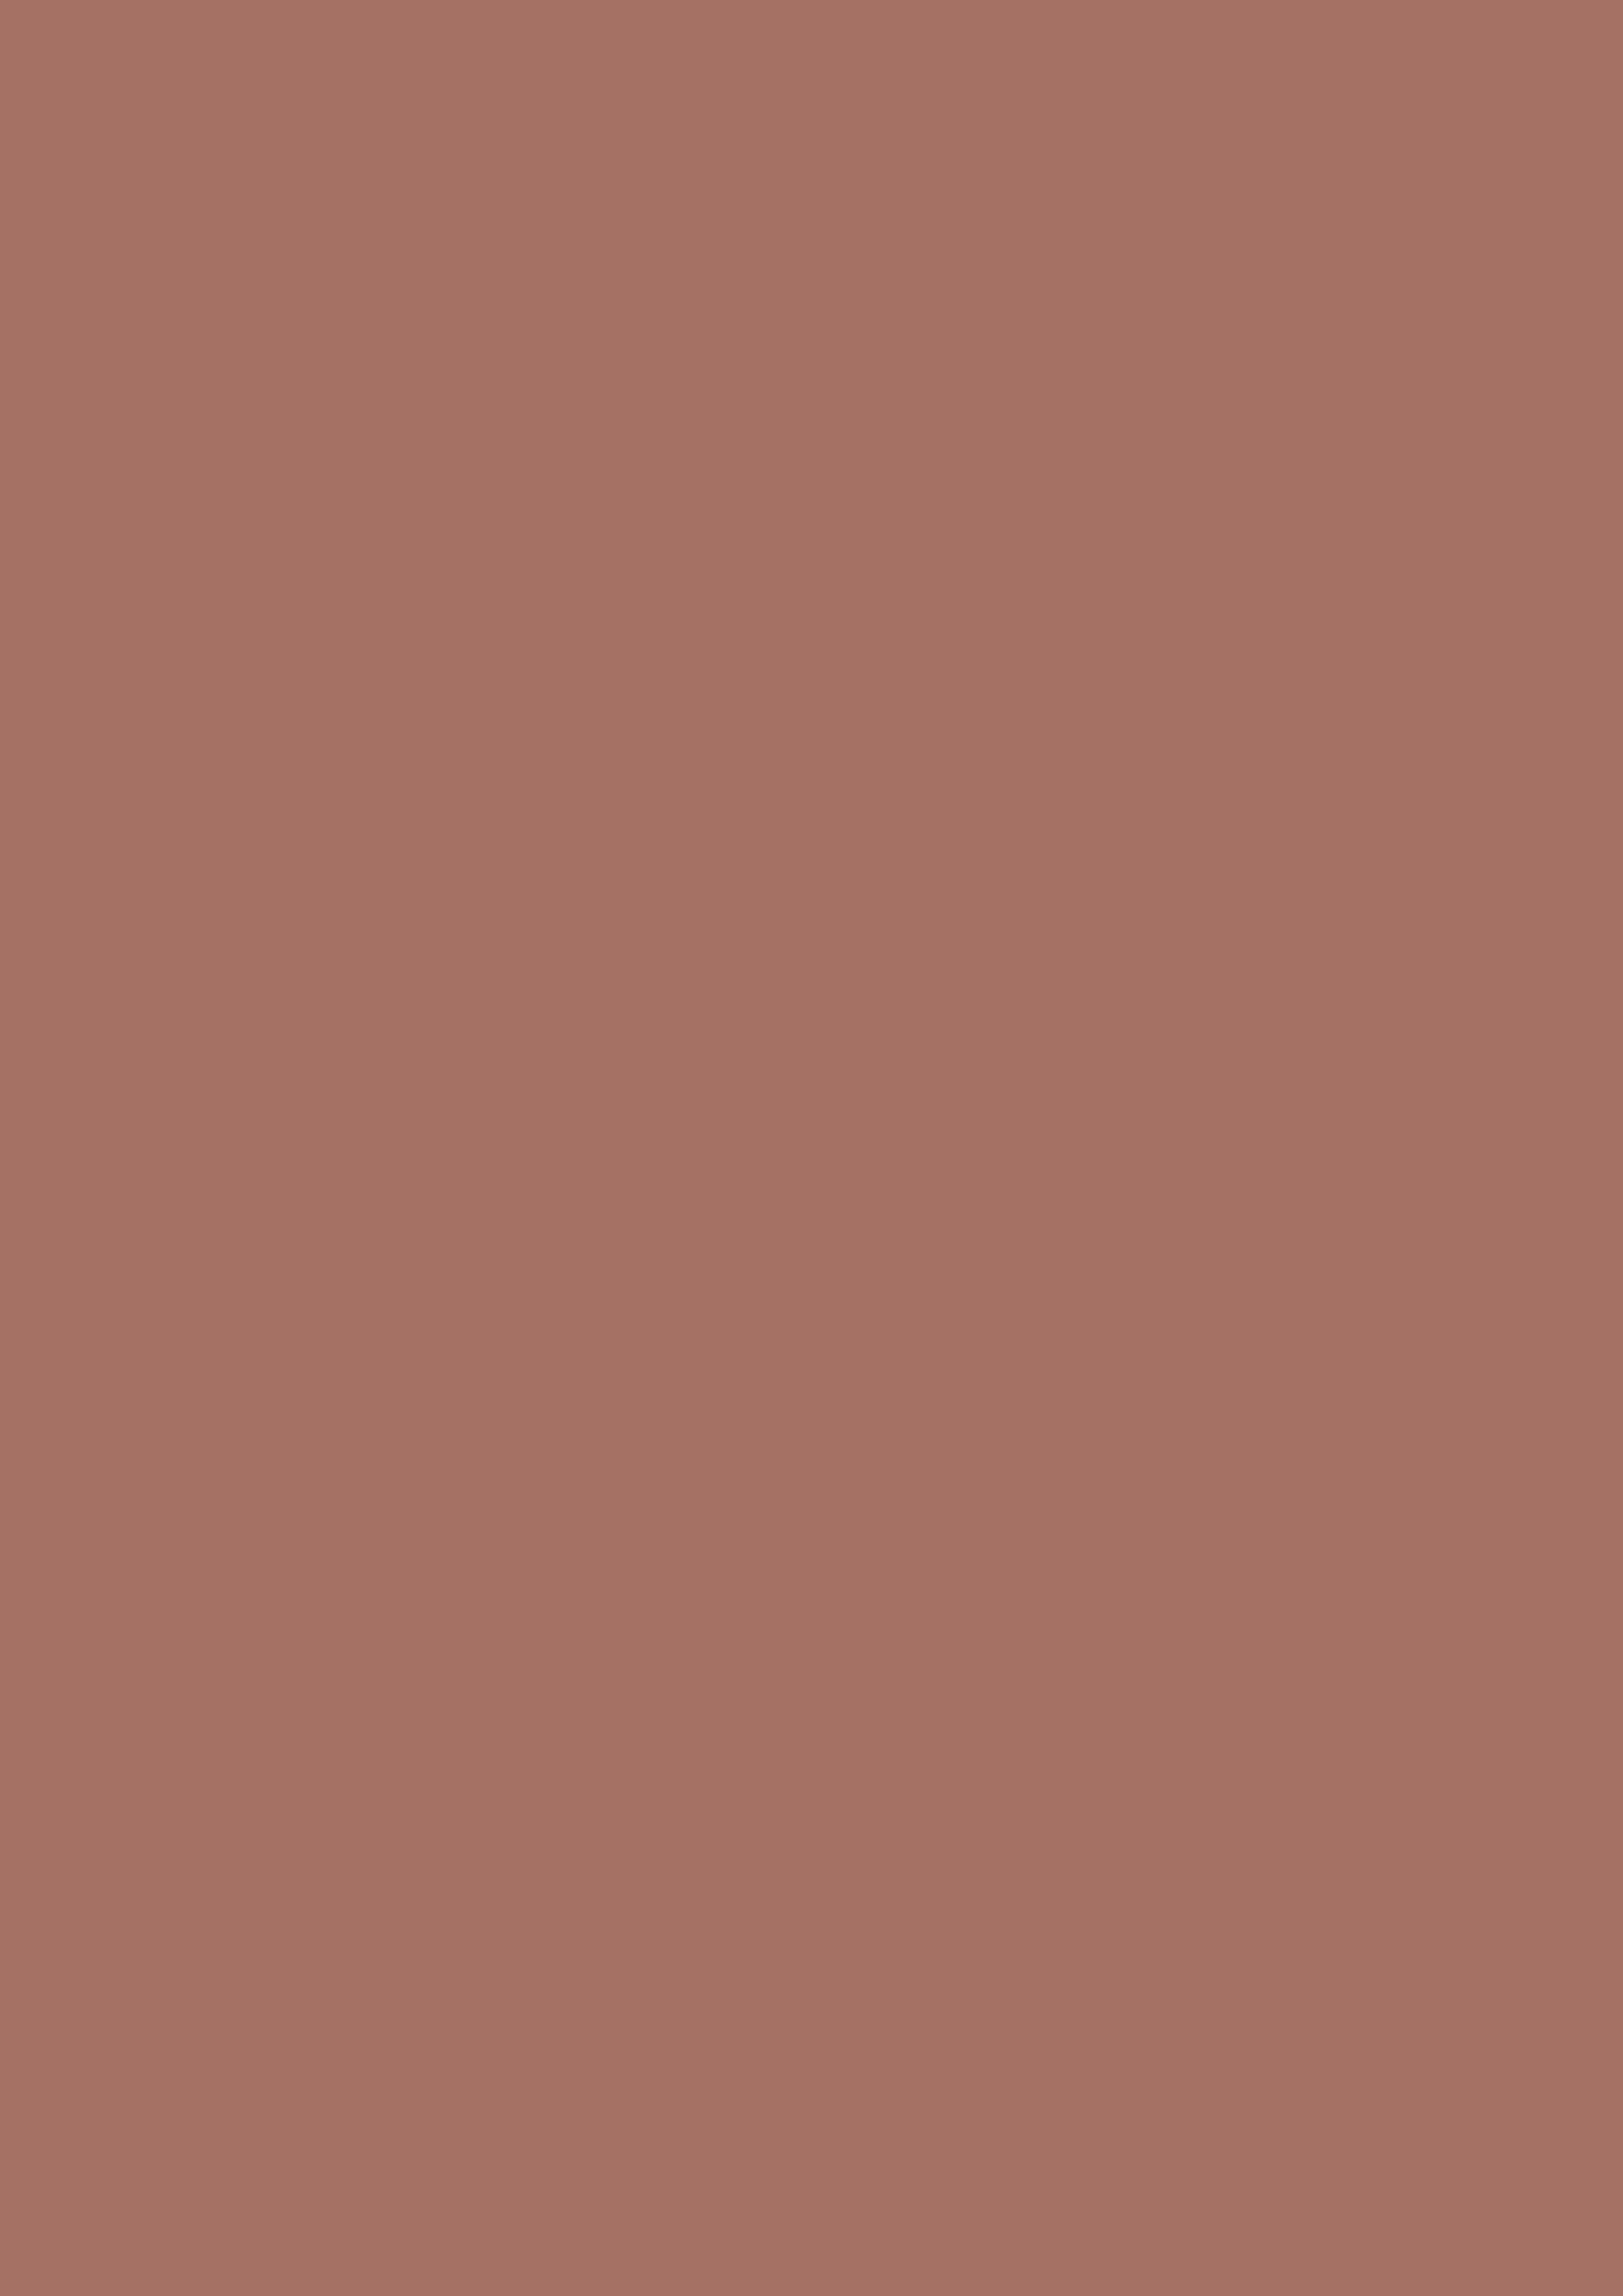 2480x3508 Blast-off Bronze Solid Color Background